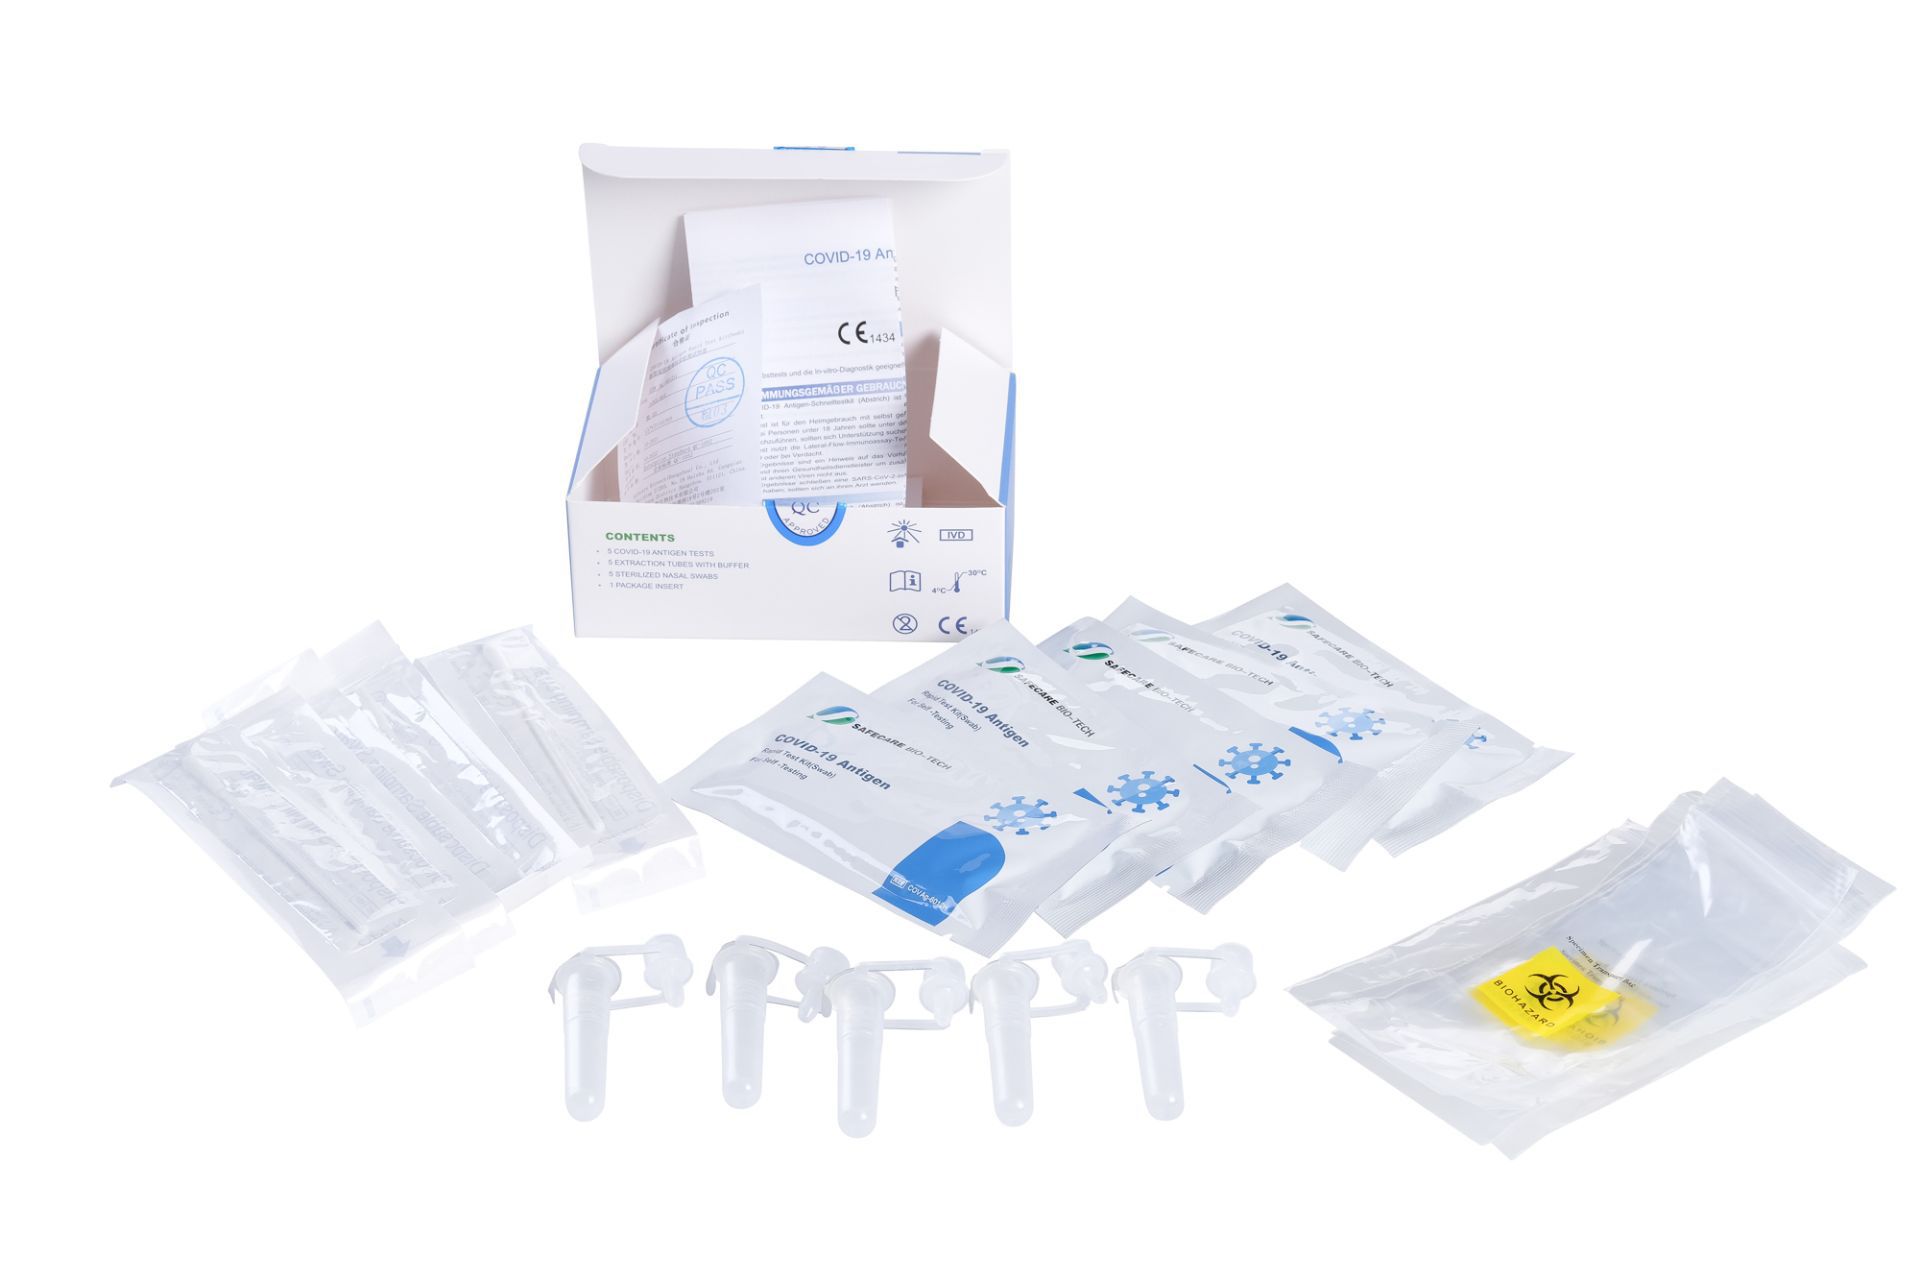 Safecare Corona Selbsttest COVID-19 Antigen Rapid Test-Kit Nase